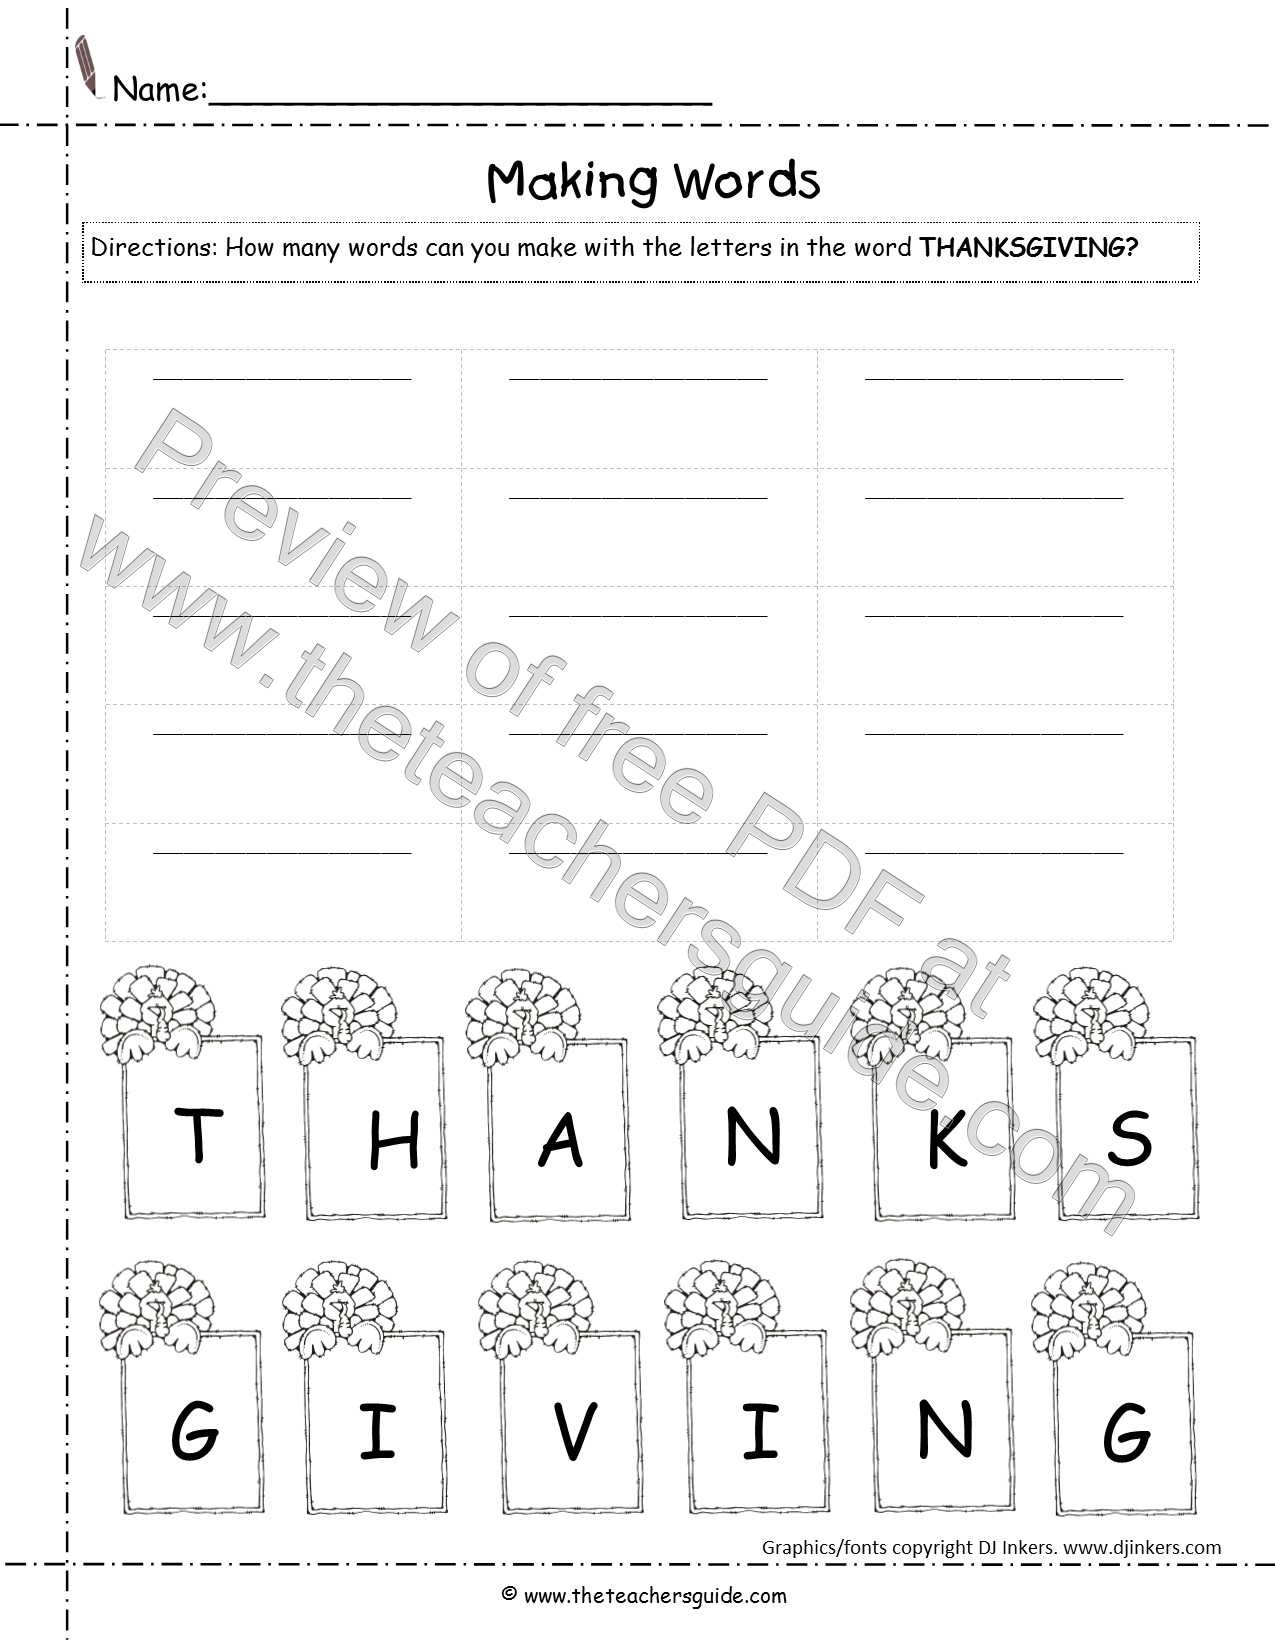 Thanksgiving Lesson Plans, Themes, Printouts, Crafts